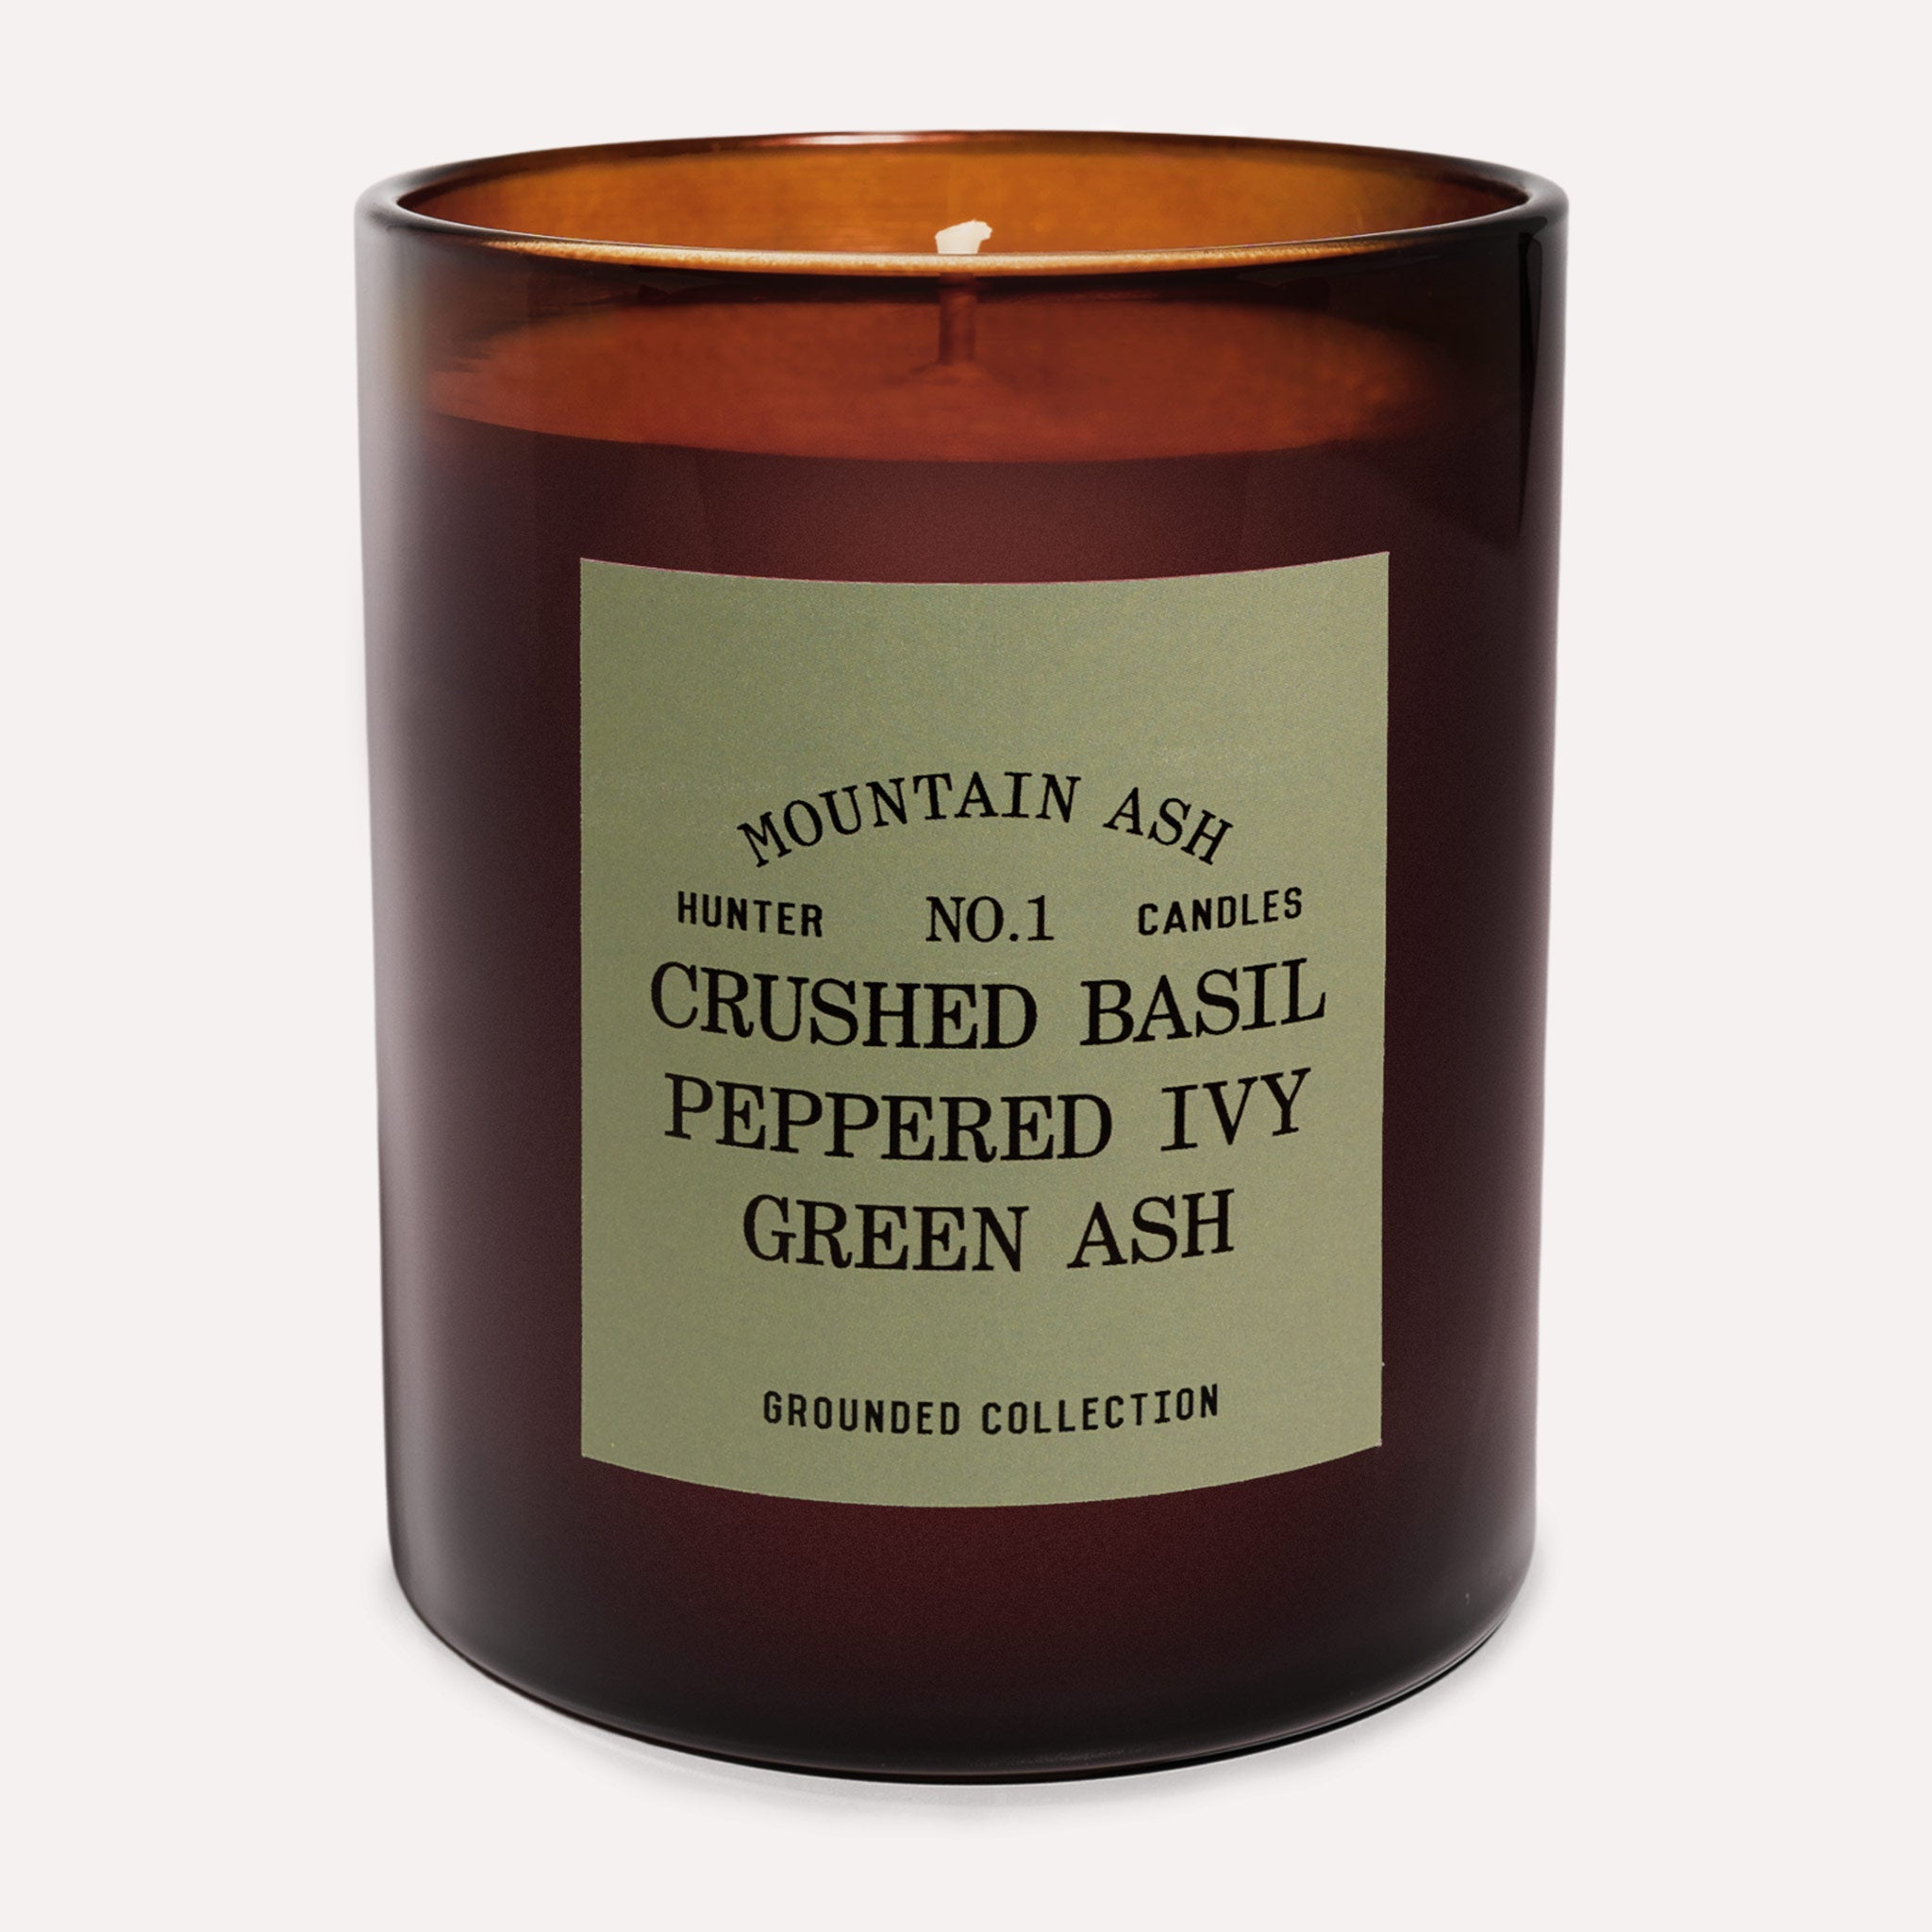 NO. 1 MOUNTAIN ASH / crushed basil, peppered ivy, green ash